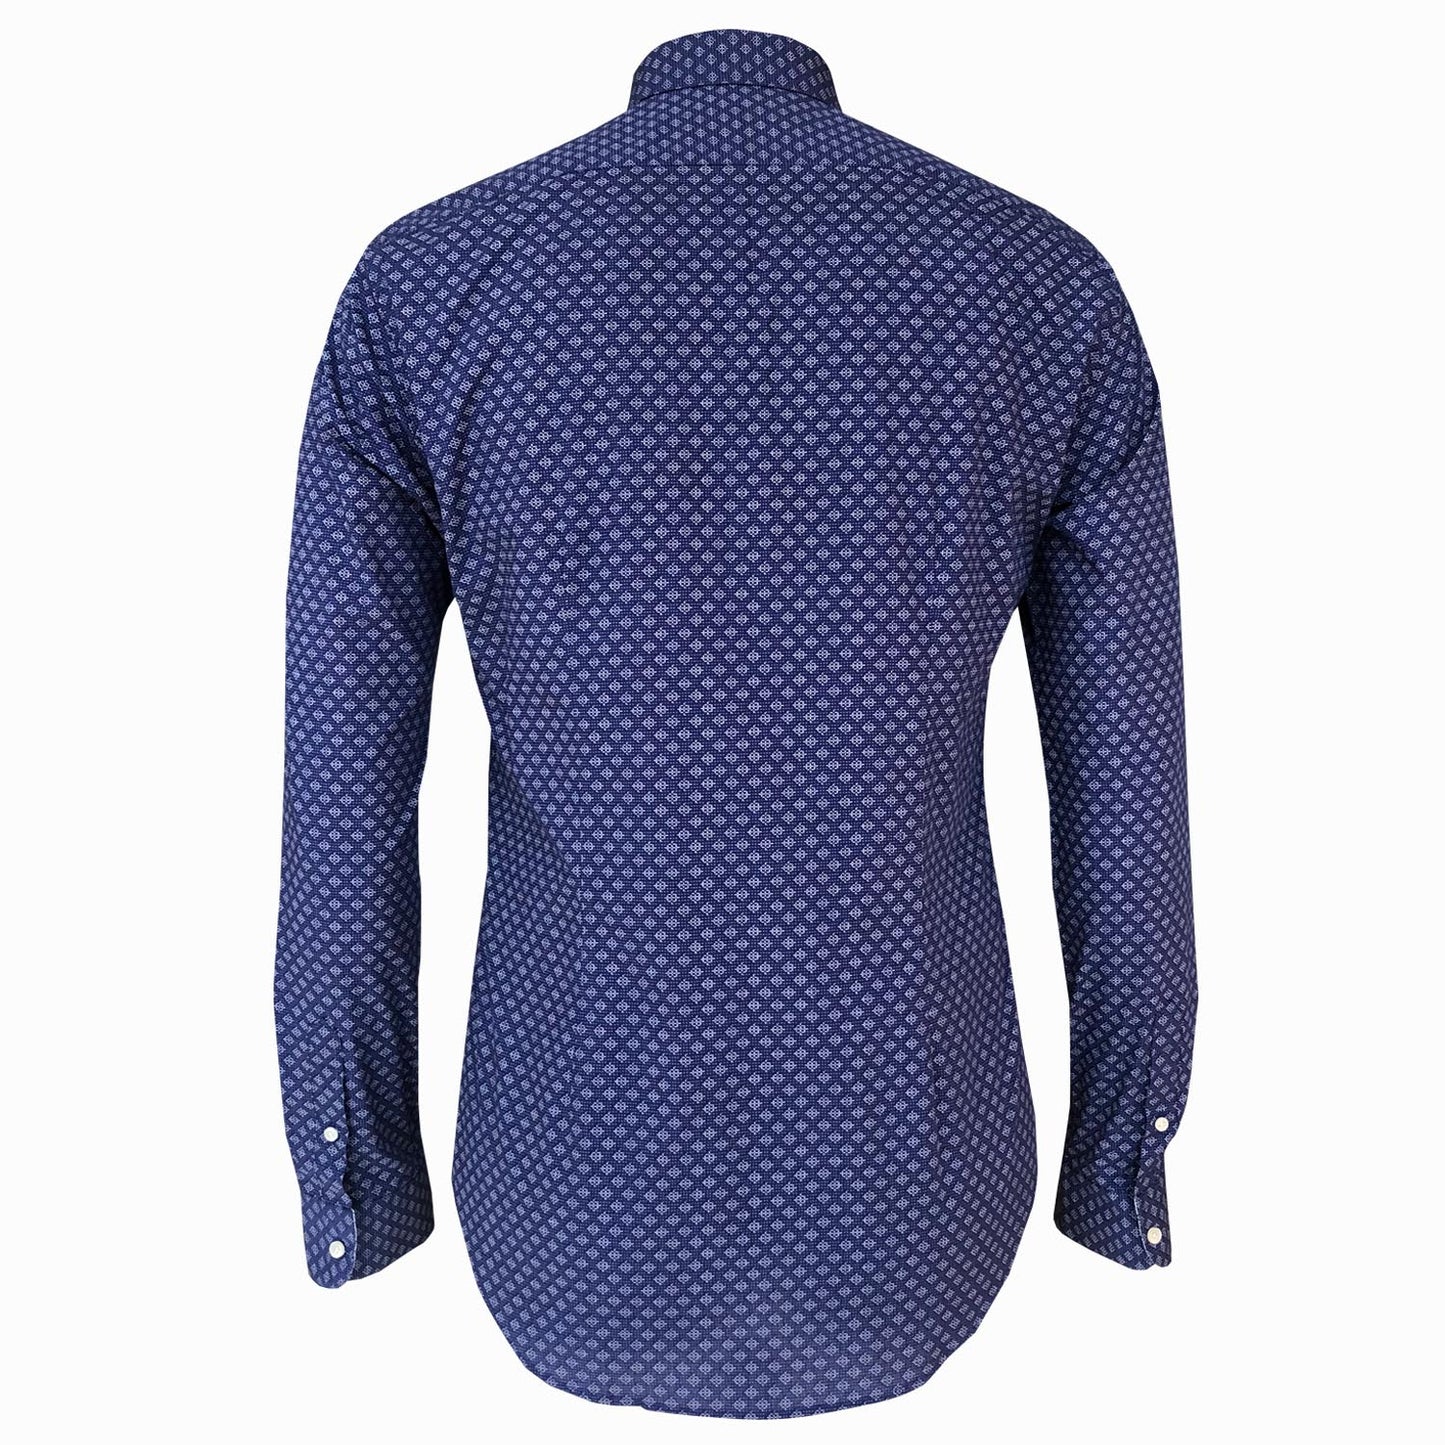 LUXE HOMME SELECT - Premium Oxford Long Sleeve Shirt (Miles) - LabelledUp.com